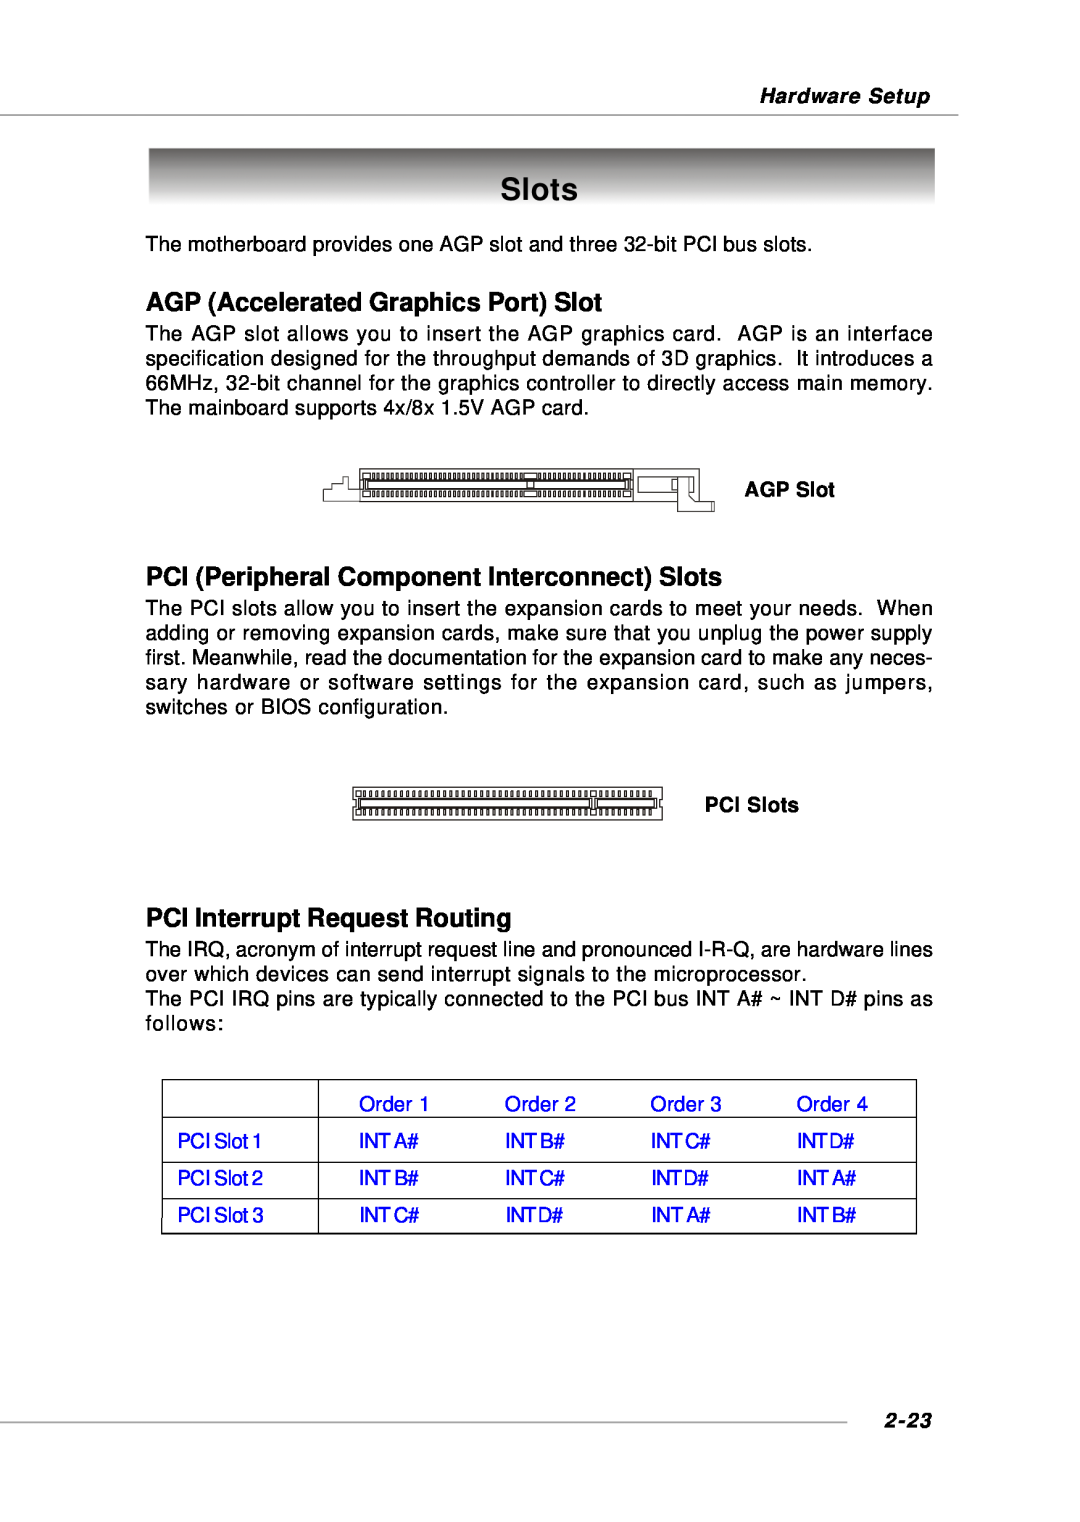 Intel KM4AM AGP Accelerated Graphics Port Slot, PCI Peripheral Component Interconnect Slots, AGP Slot, PCI Slots, 2-23 